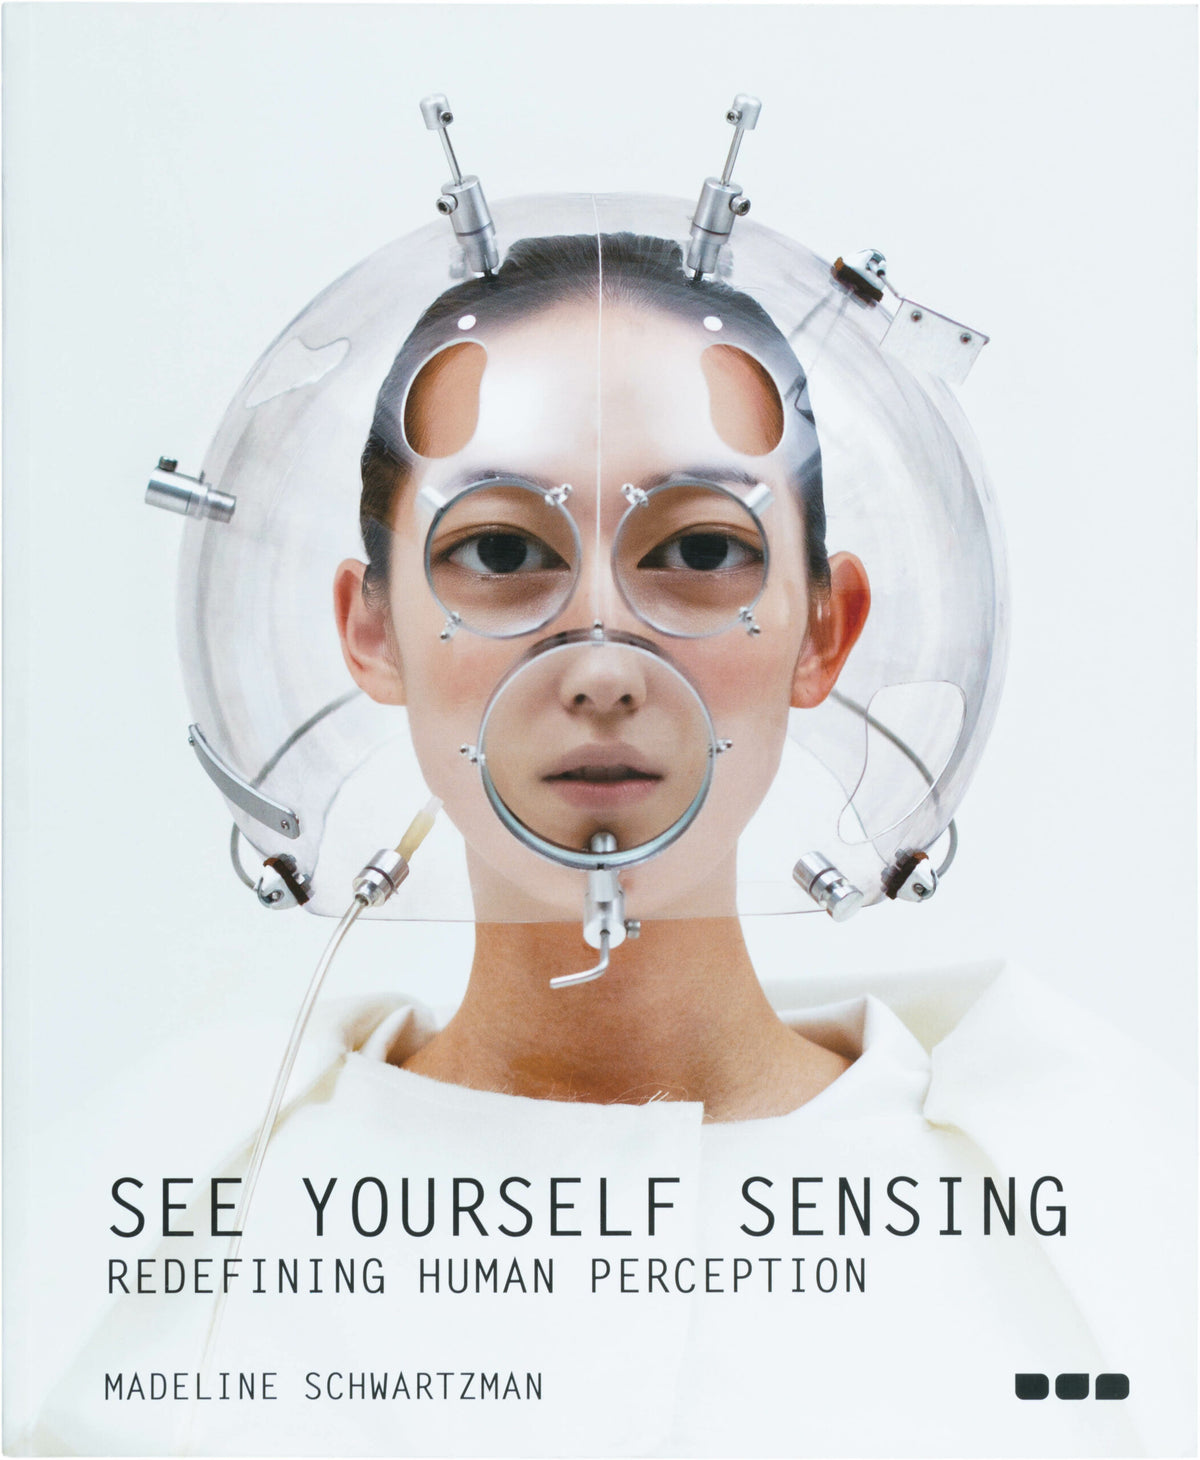 See Yourself Sensing: Redefining Human Perception